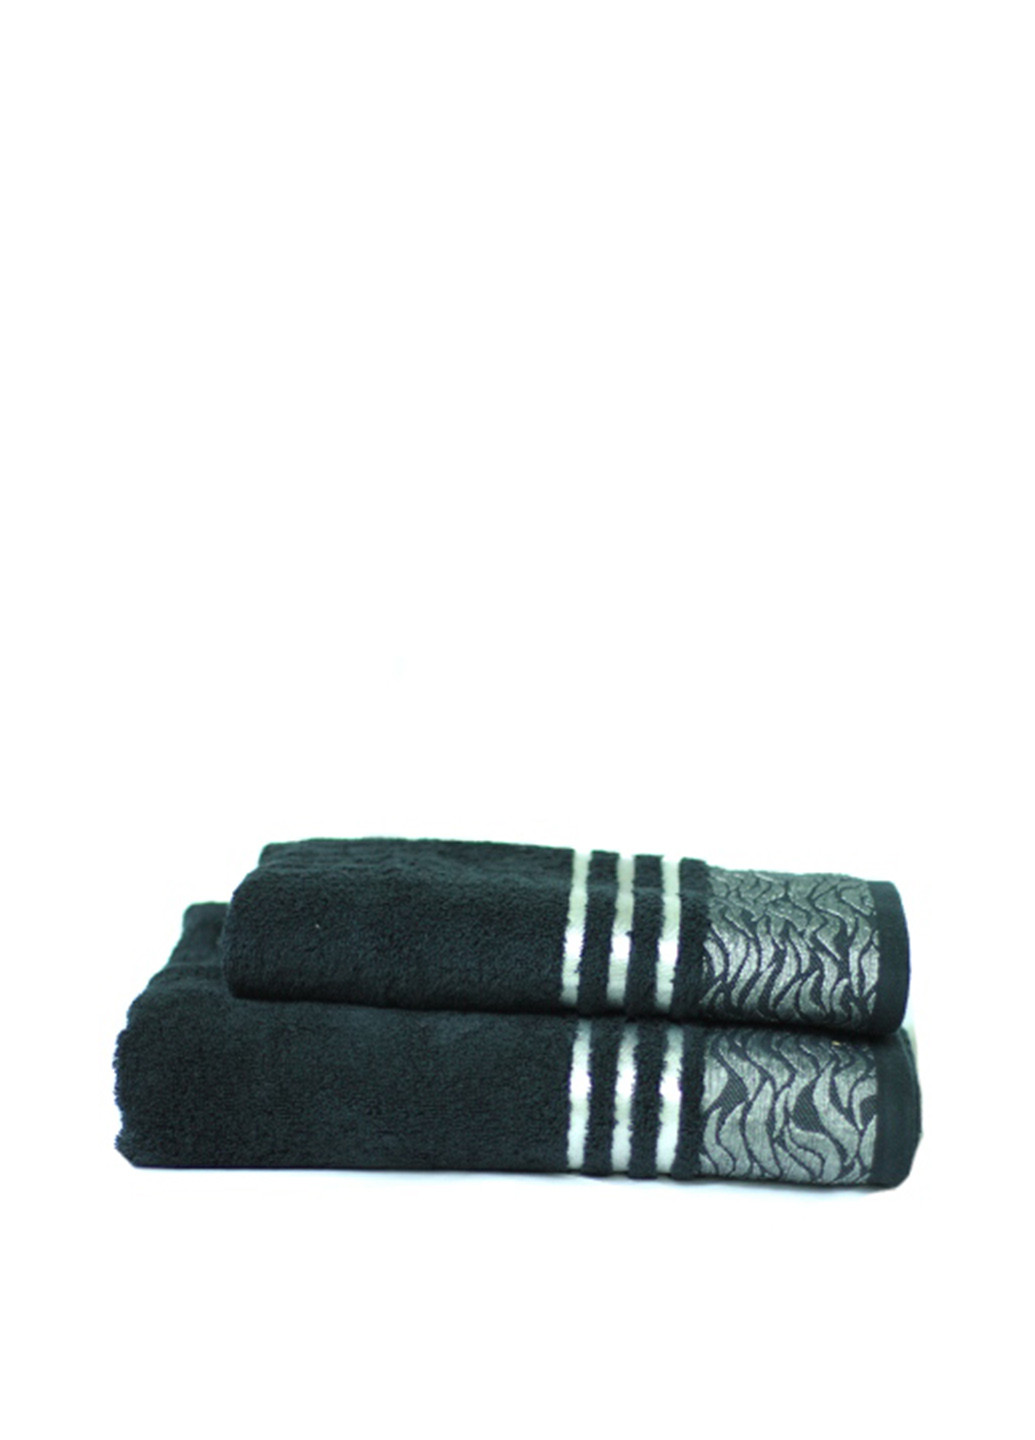 Home Line полотенце, 70х140 см орнамент черный производство - Турция